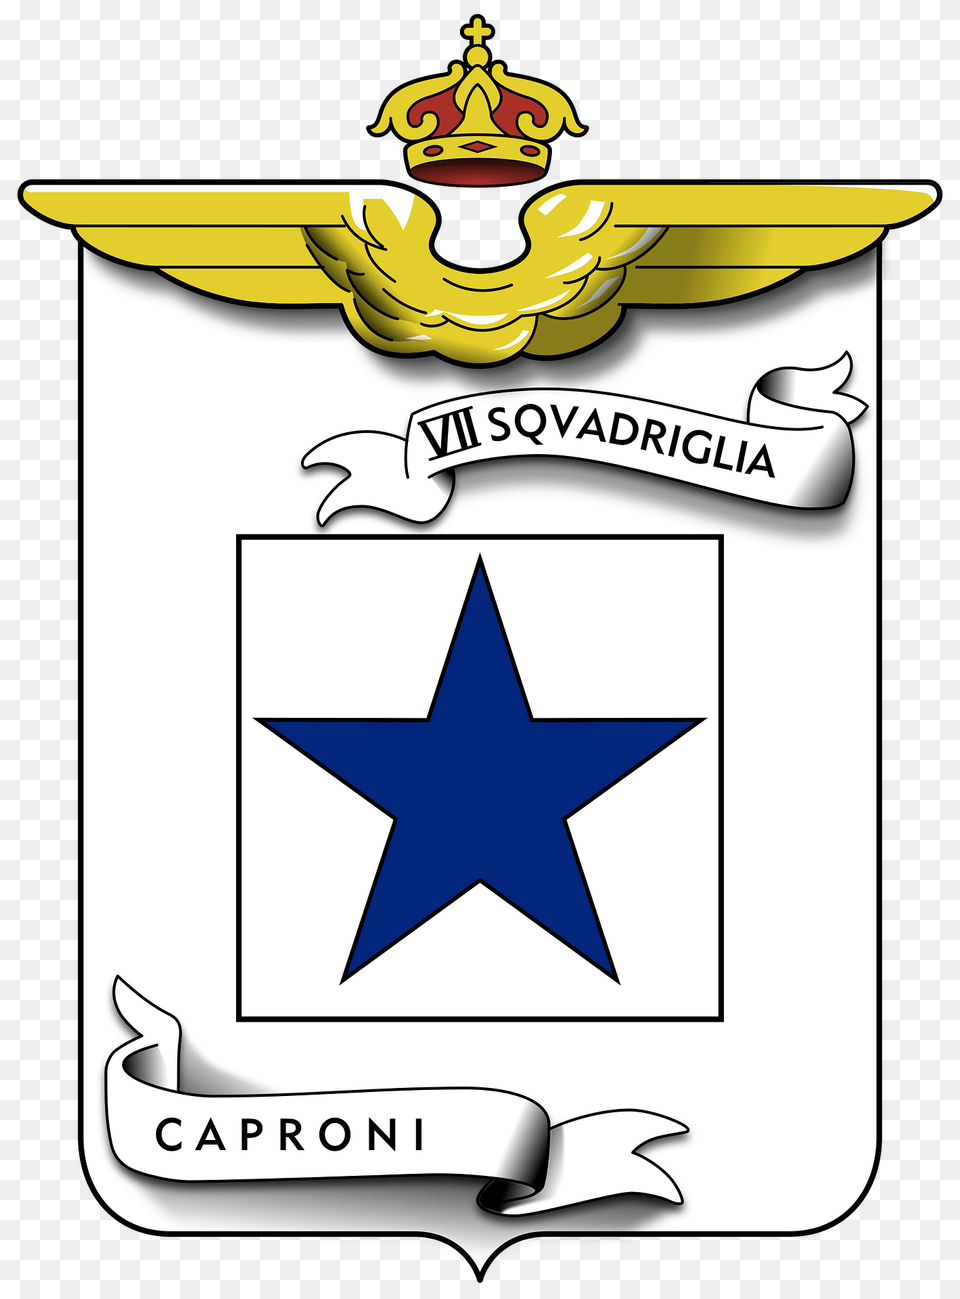 Coa Vii Squadriglia Caproni Clipart, Symbol, Star Symbol, Logo, First Aid Free Png Download